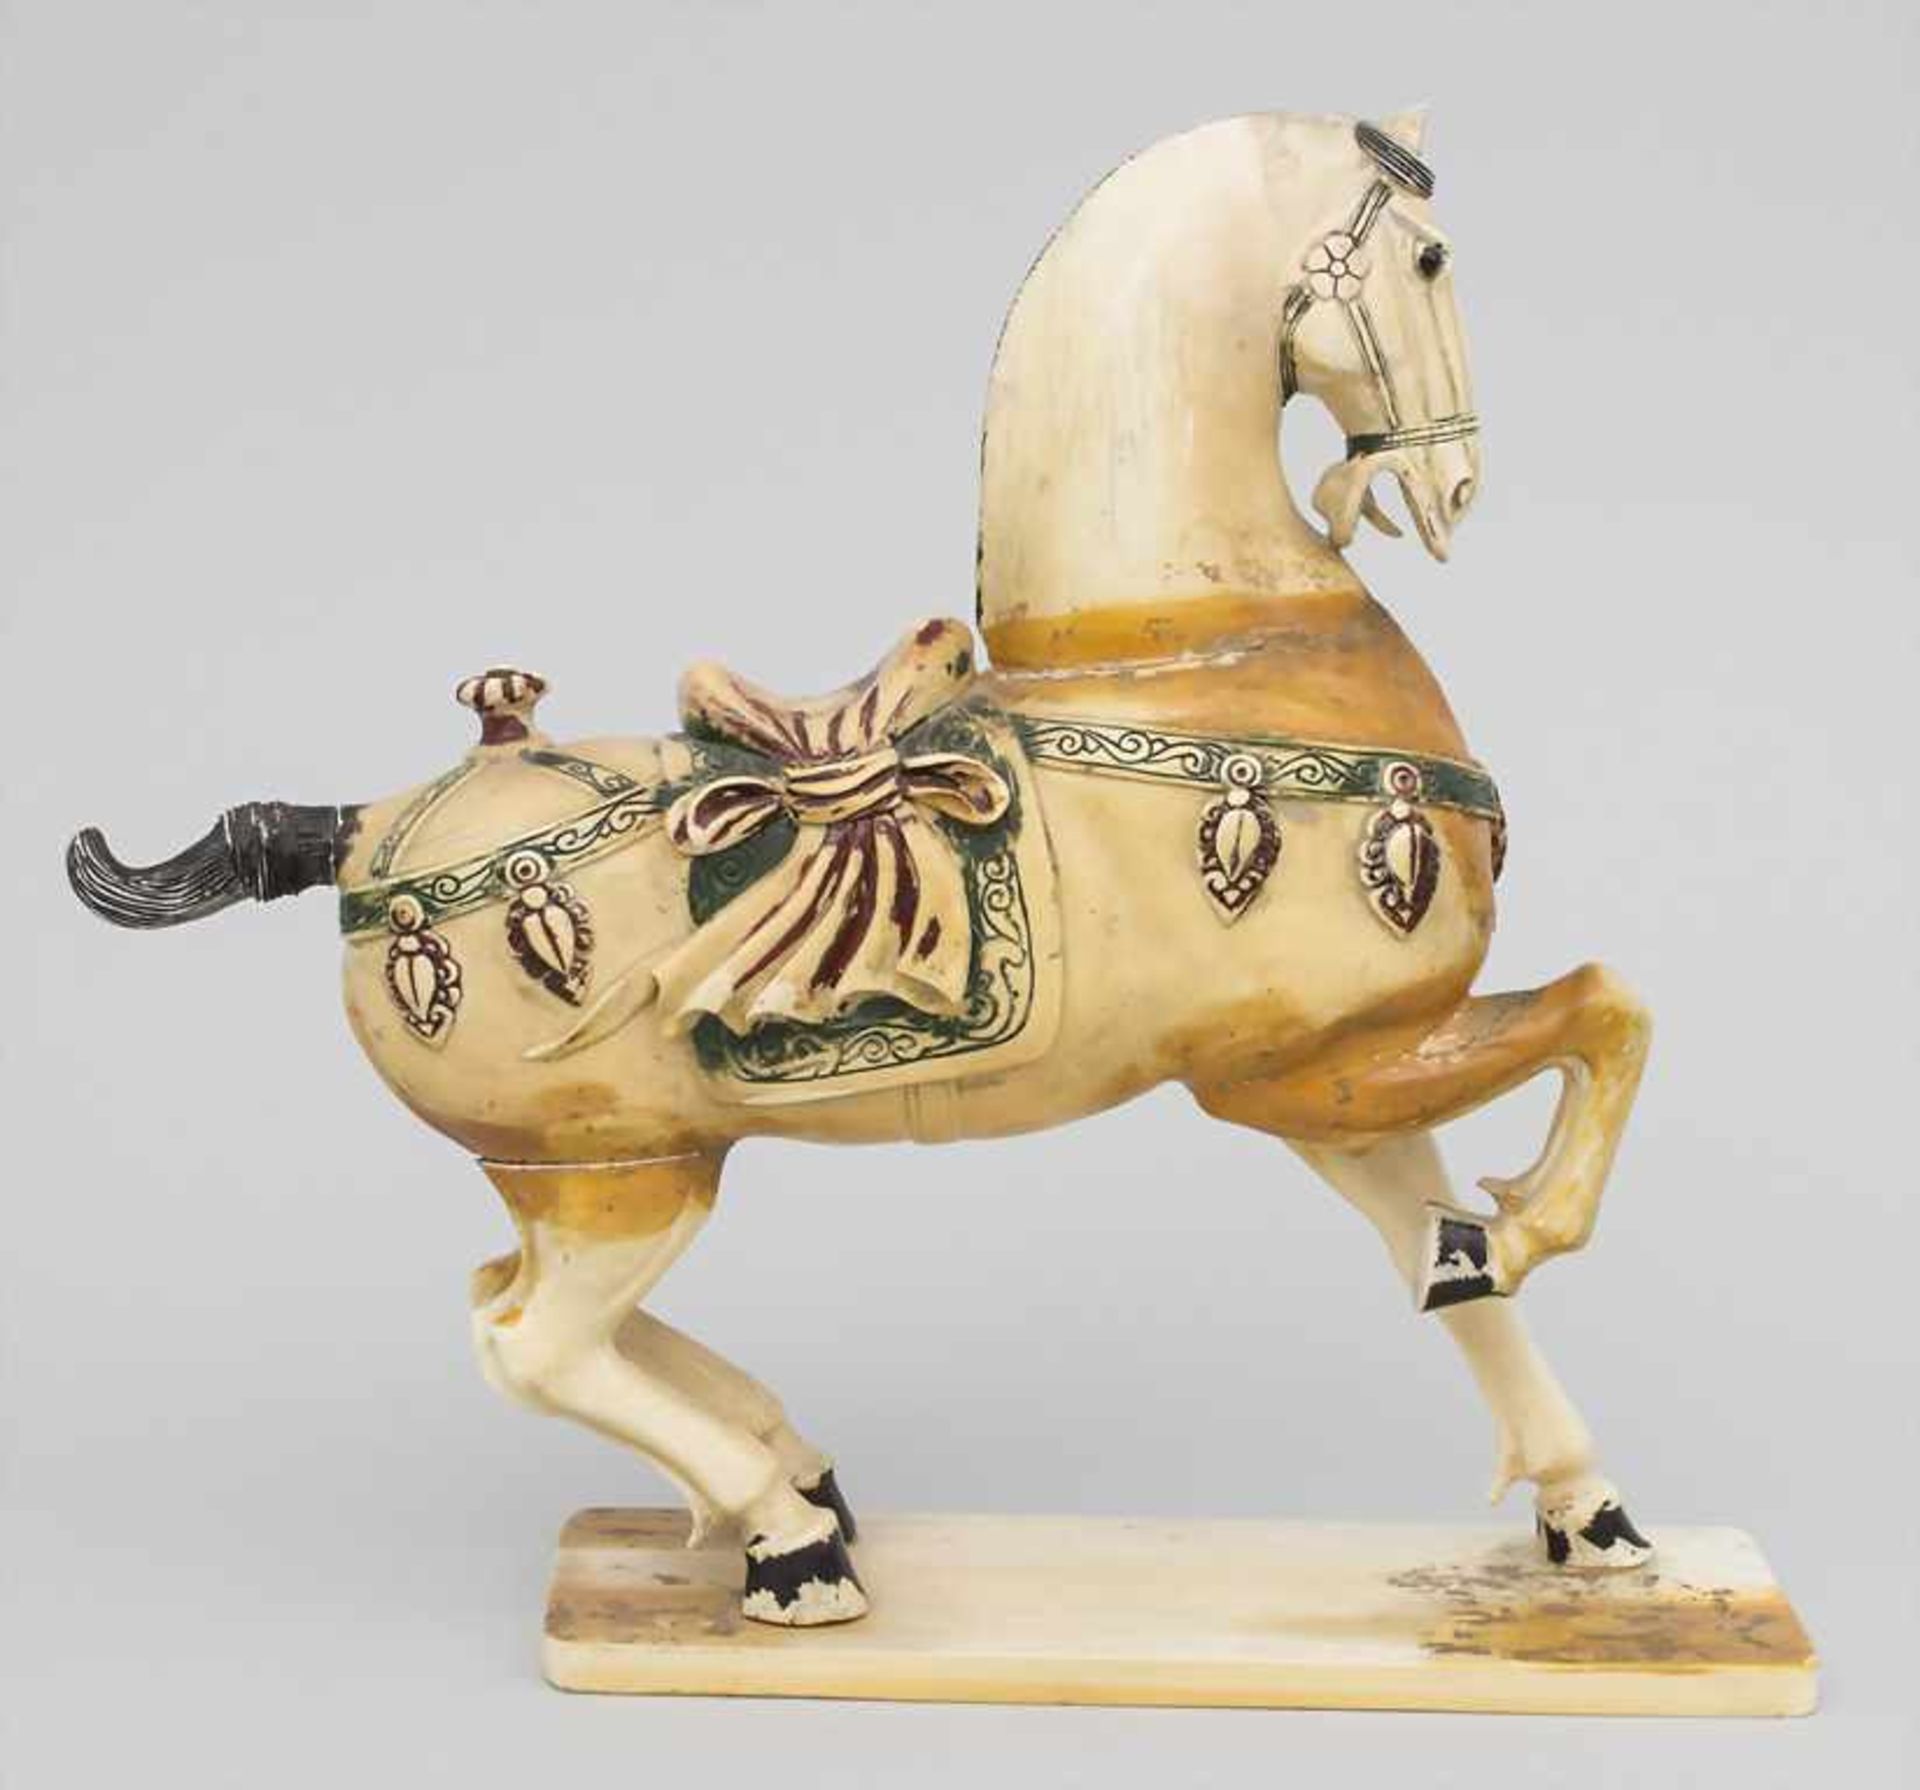 Tierfigur 'Pferd' / An animal figure 'Horse', China, 18. / 19. Jh. - Image 4 of 7